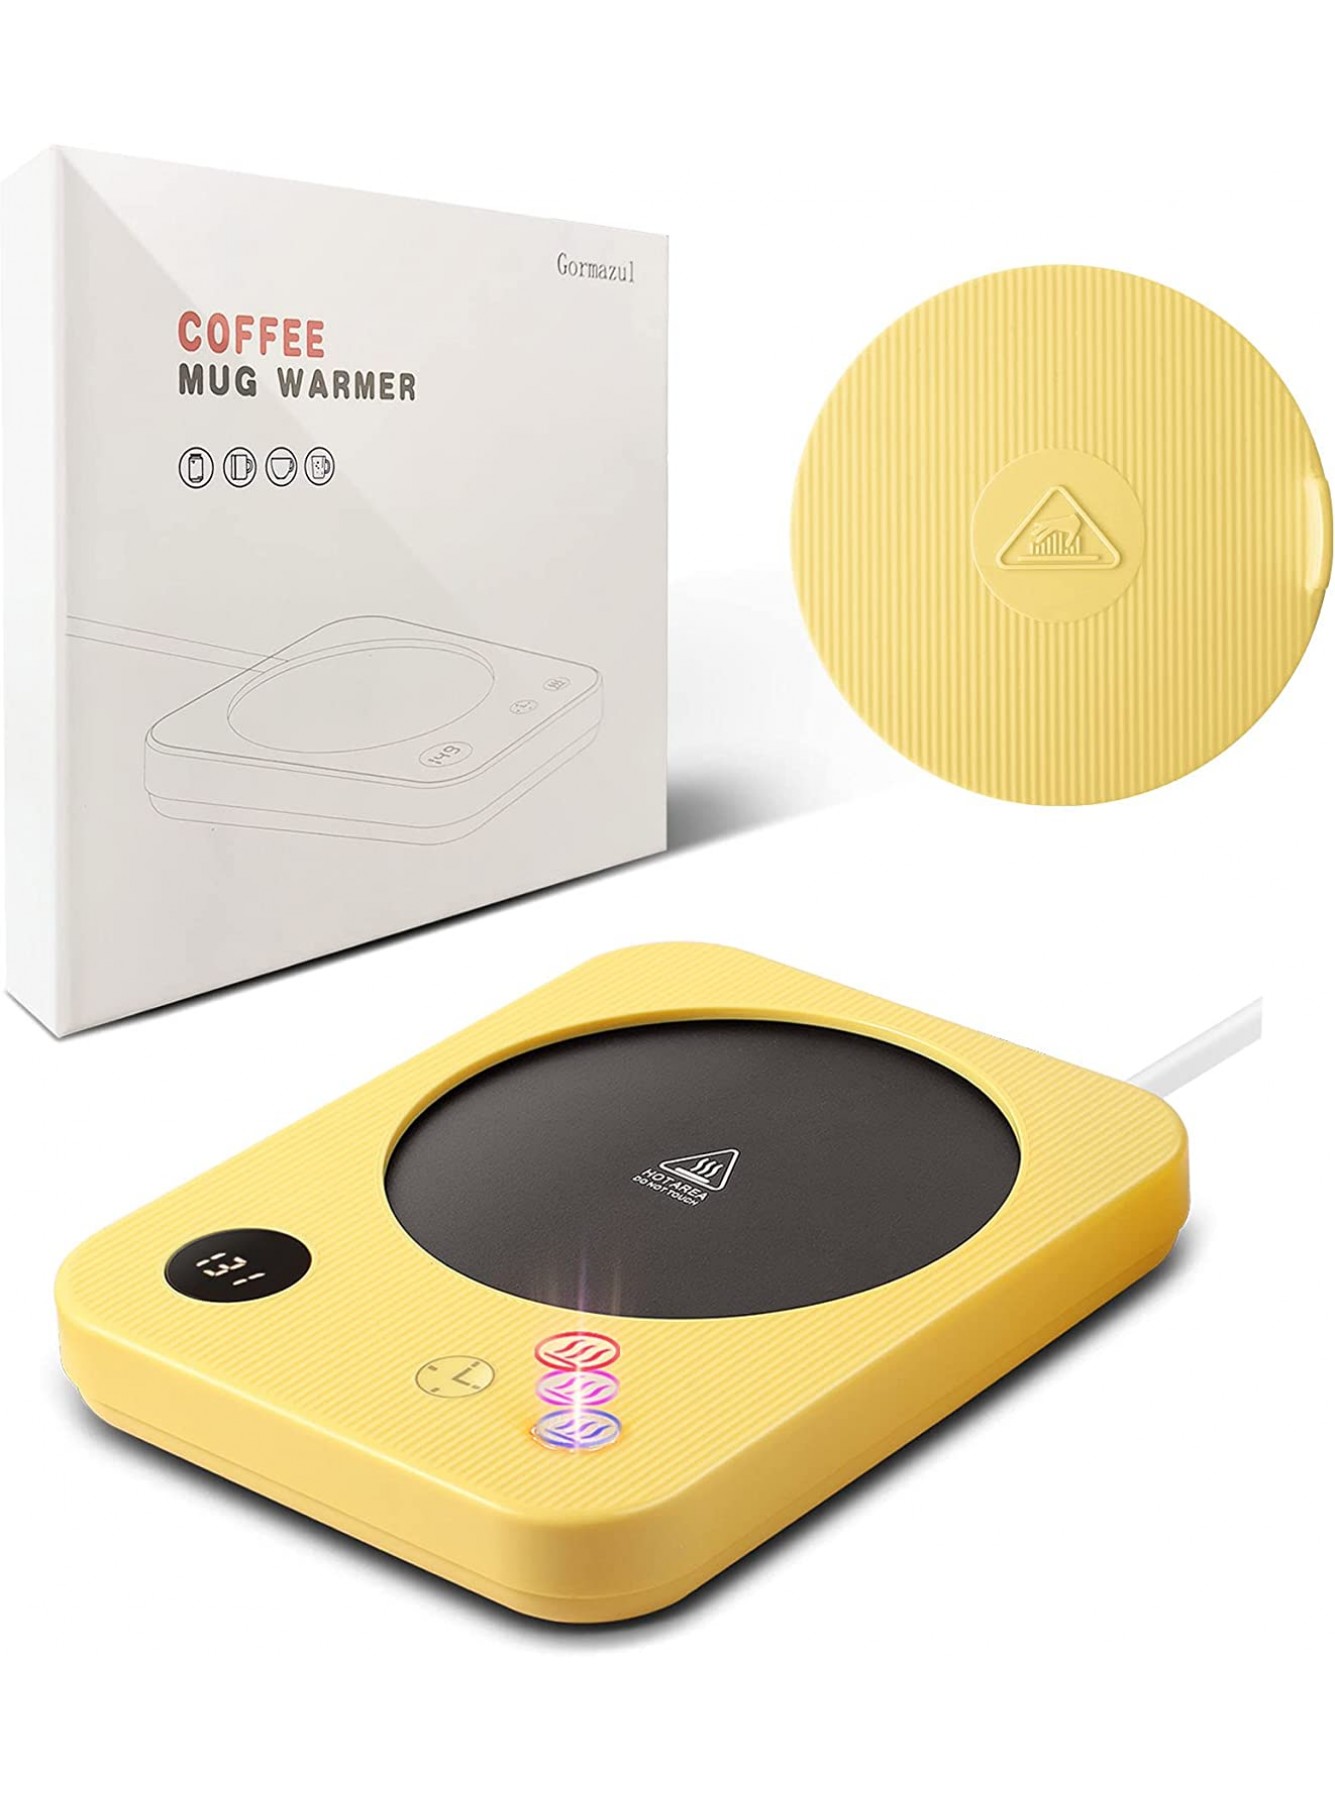 Gormazul Coffee Mug Warmer Coffee Warmer for Desk with Auto Shut Off Beverage Heater for Home and Office Use Digital Temp Control Yellow B09M9LMYNL